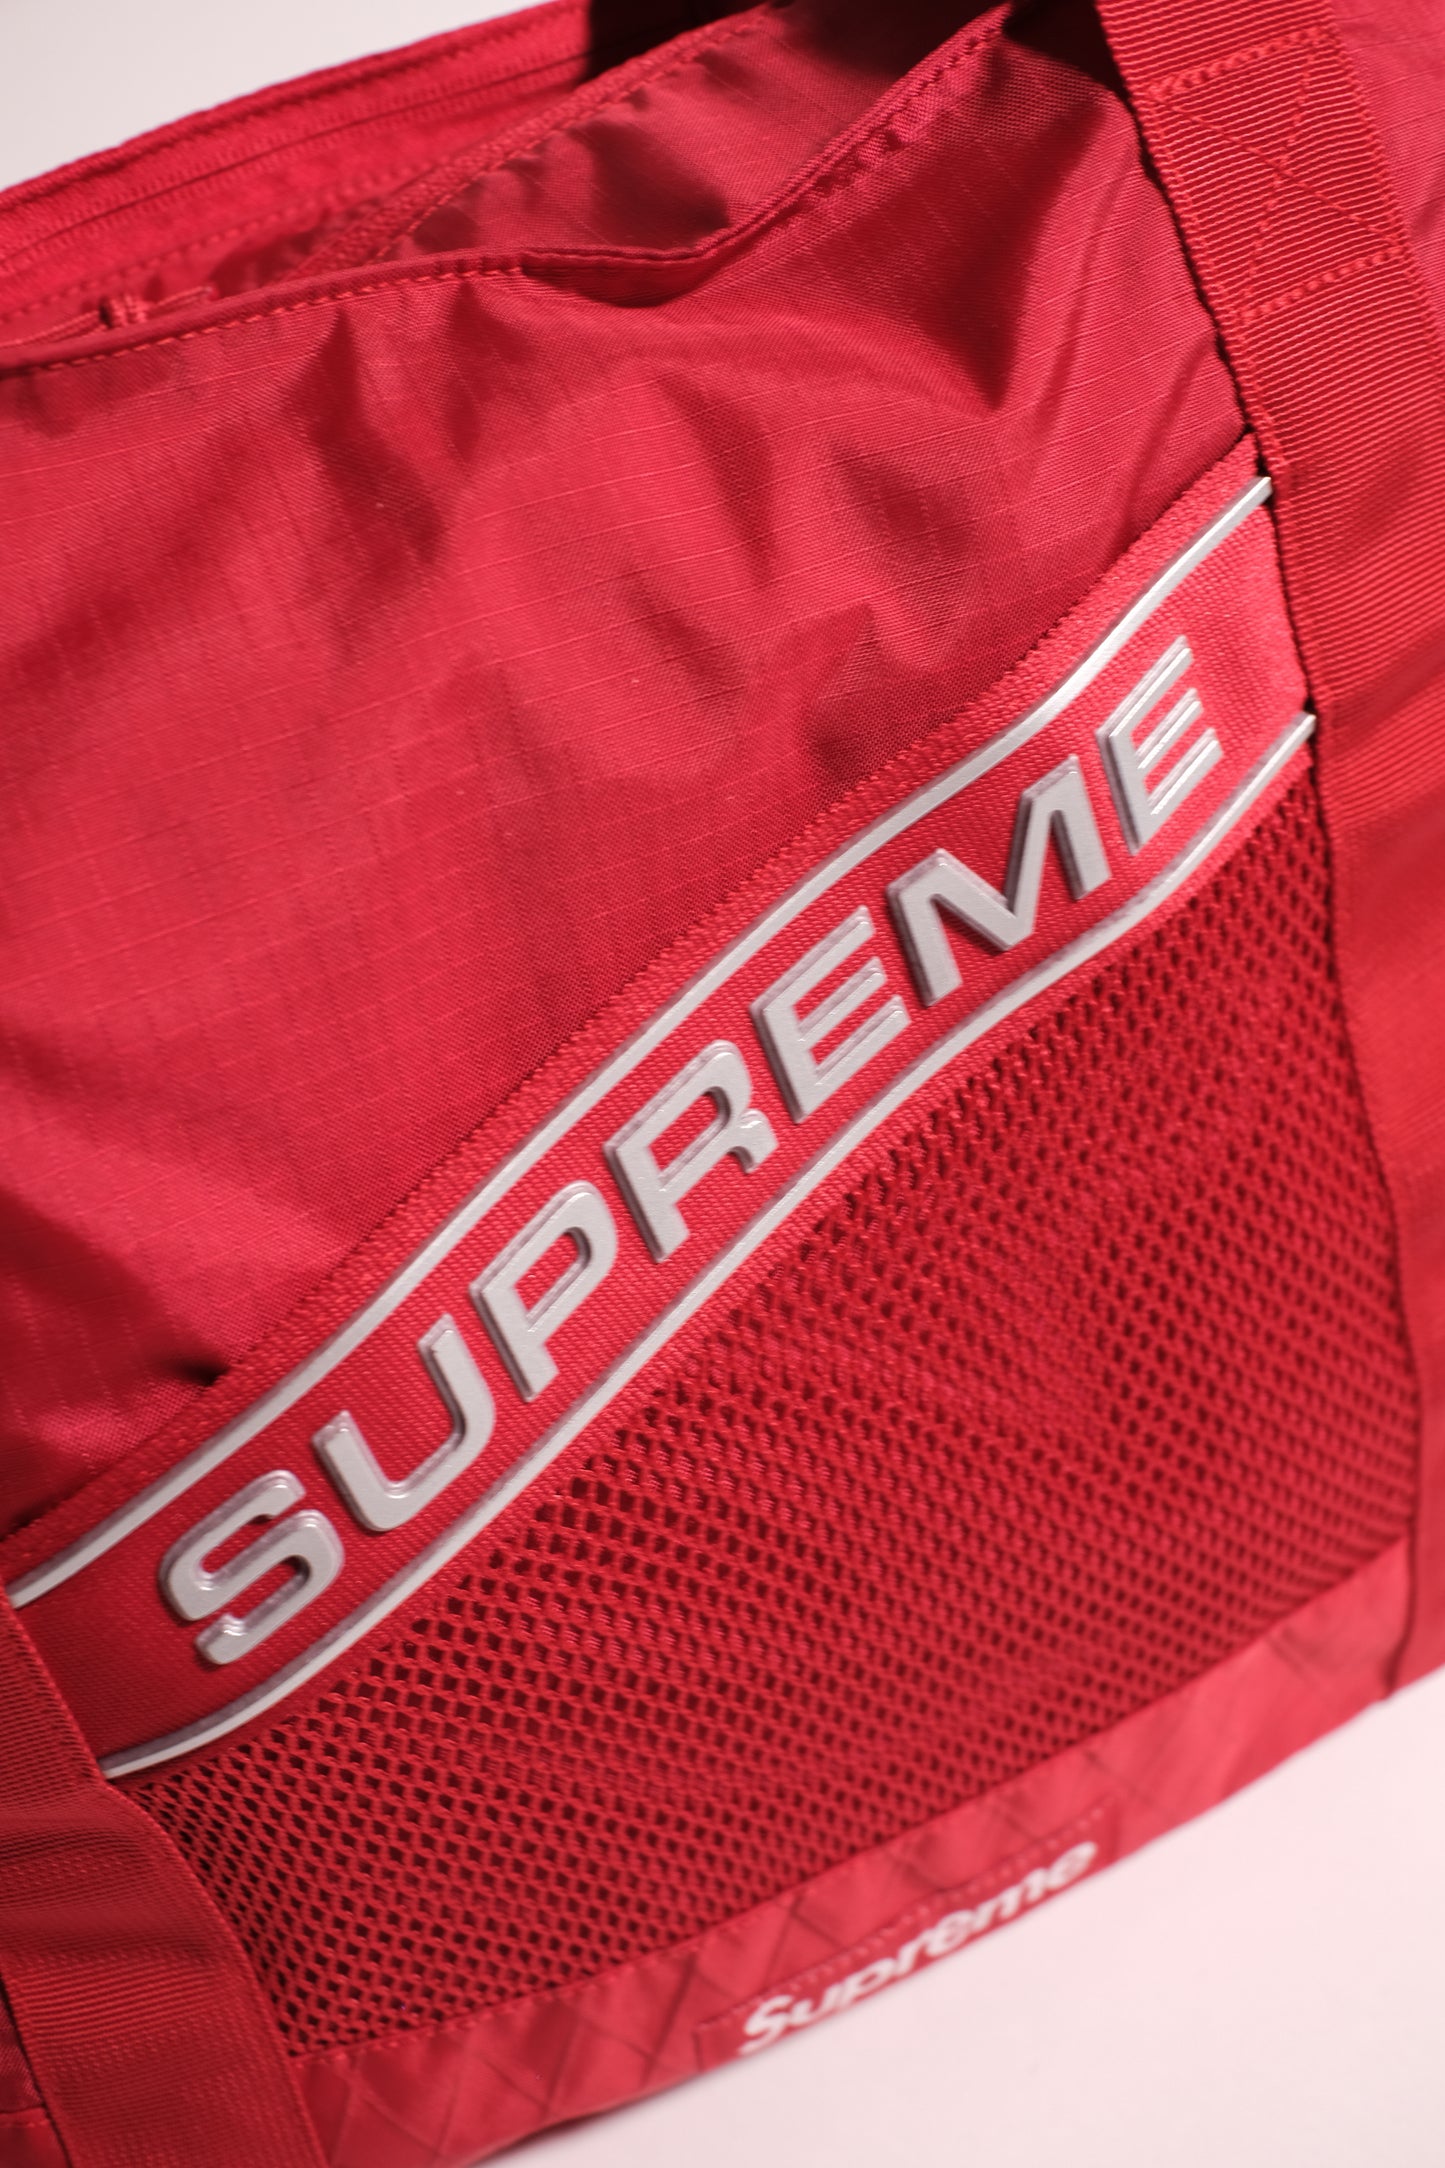 Supreme Tote Bag Red